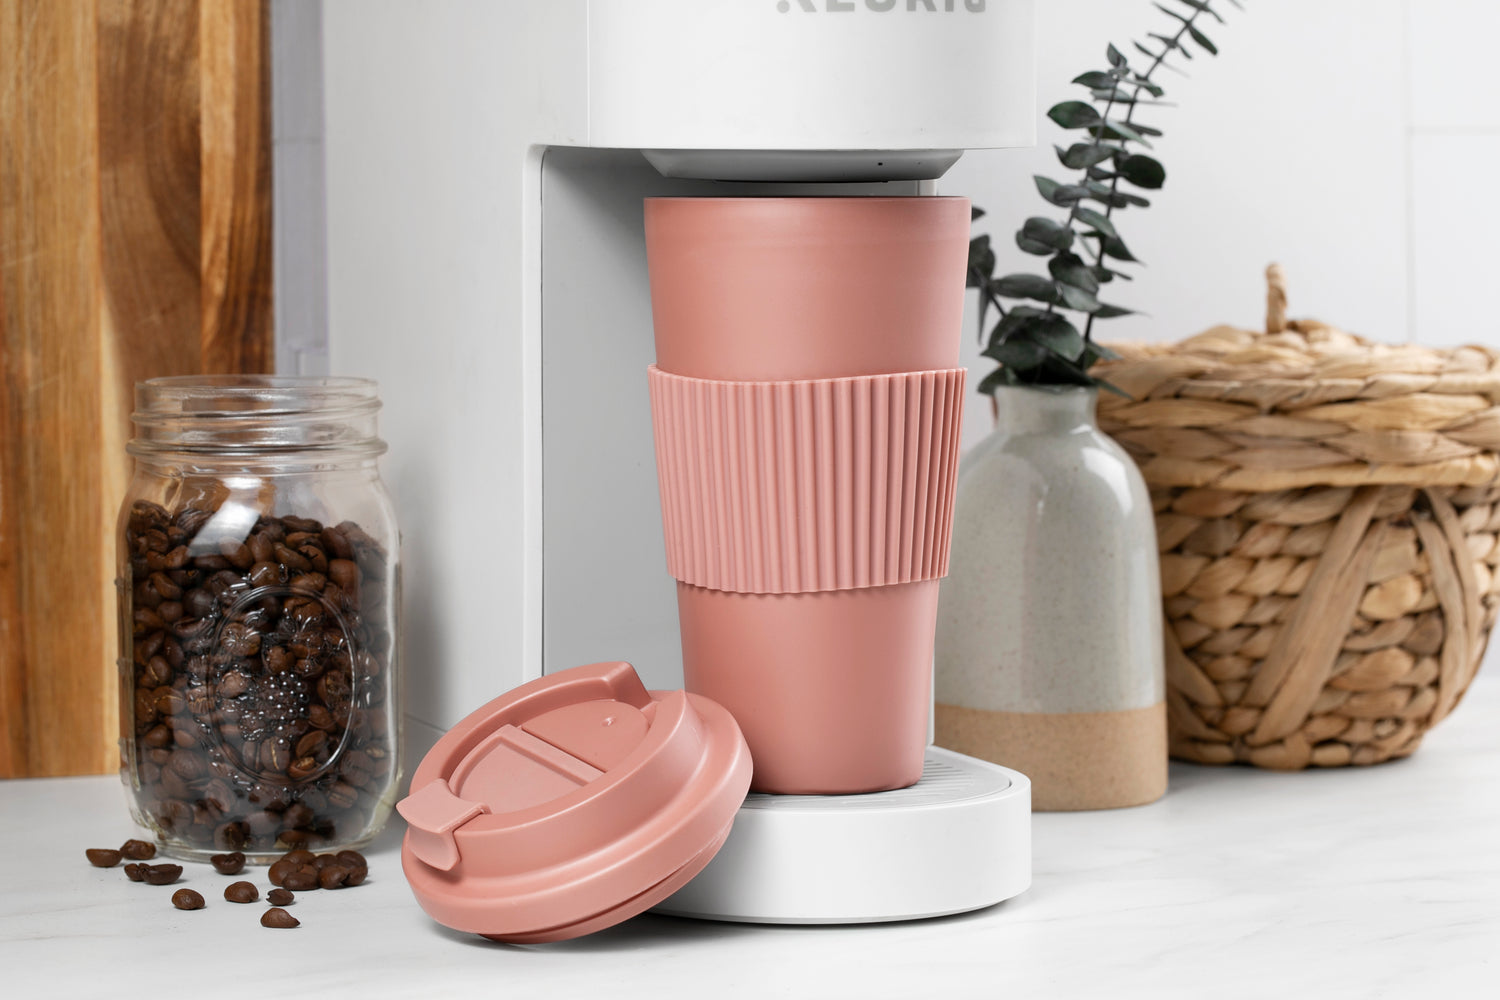 FEBU Reusable Coffee Cup | Plant-Based, Leak-Proof Travel Mug for Coffee & Tea, Sage Green Sage Green